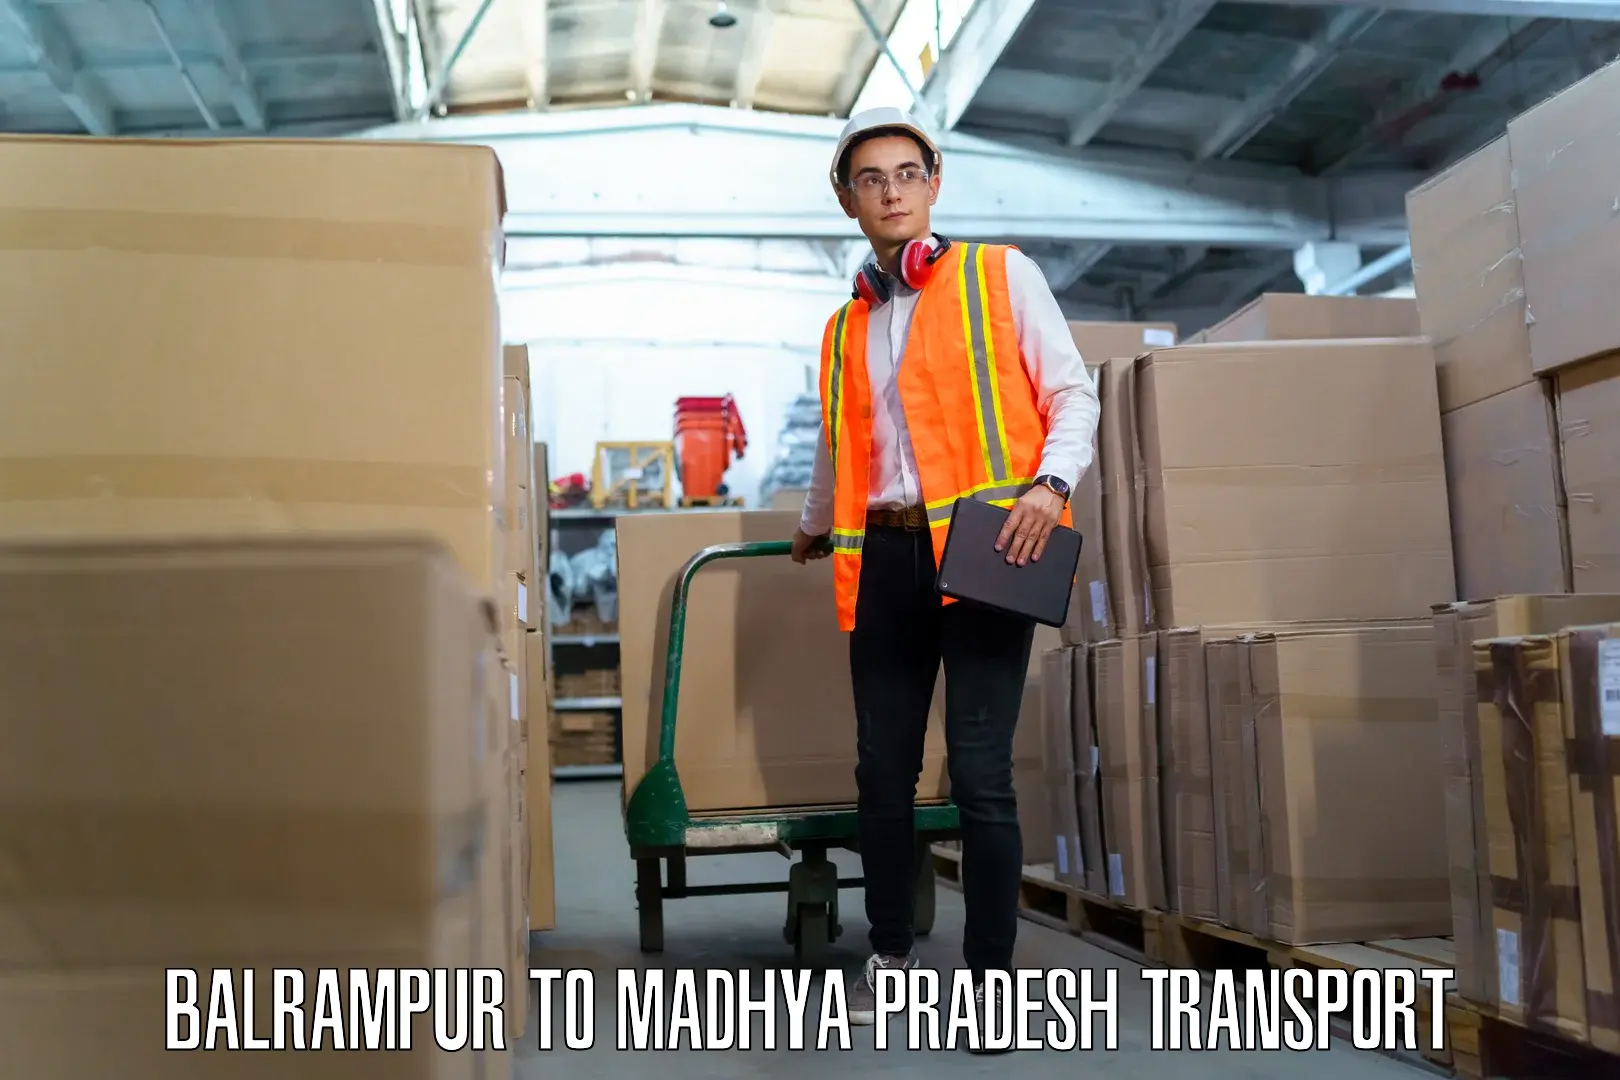 Truck transport companies in India Balrampur to Maheshwar